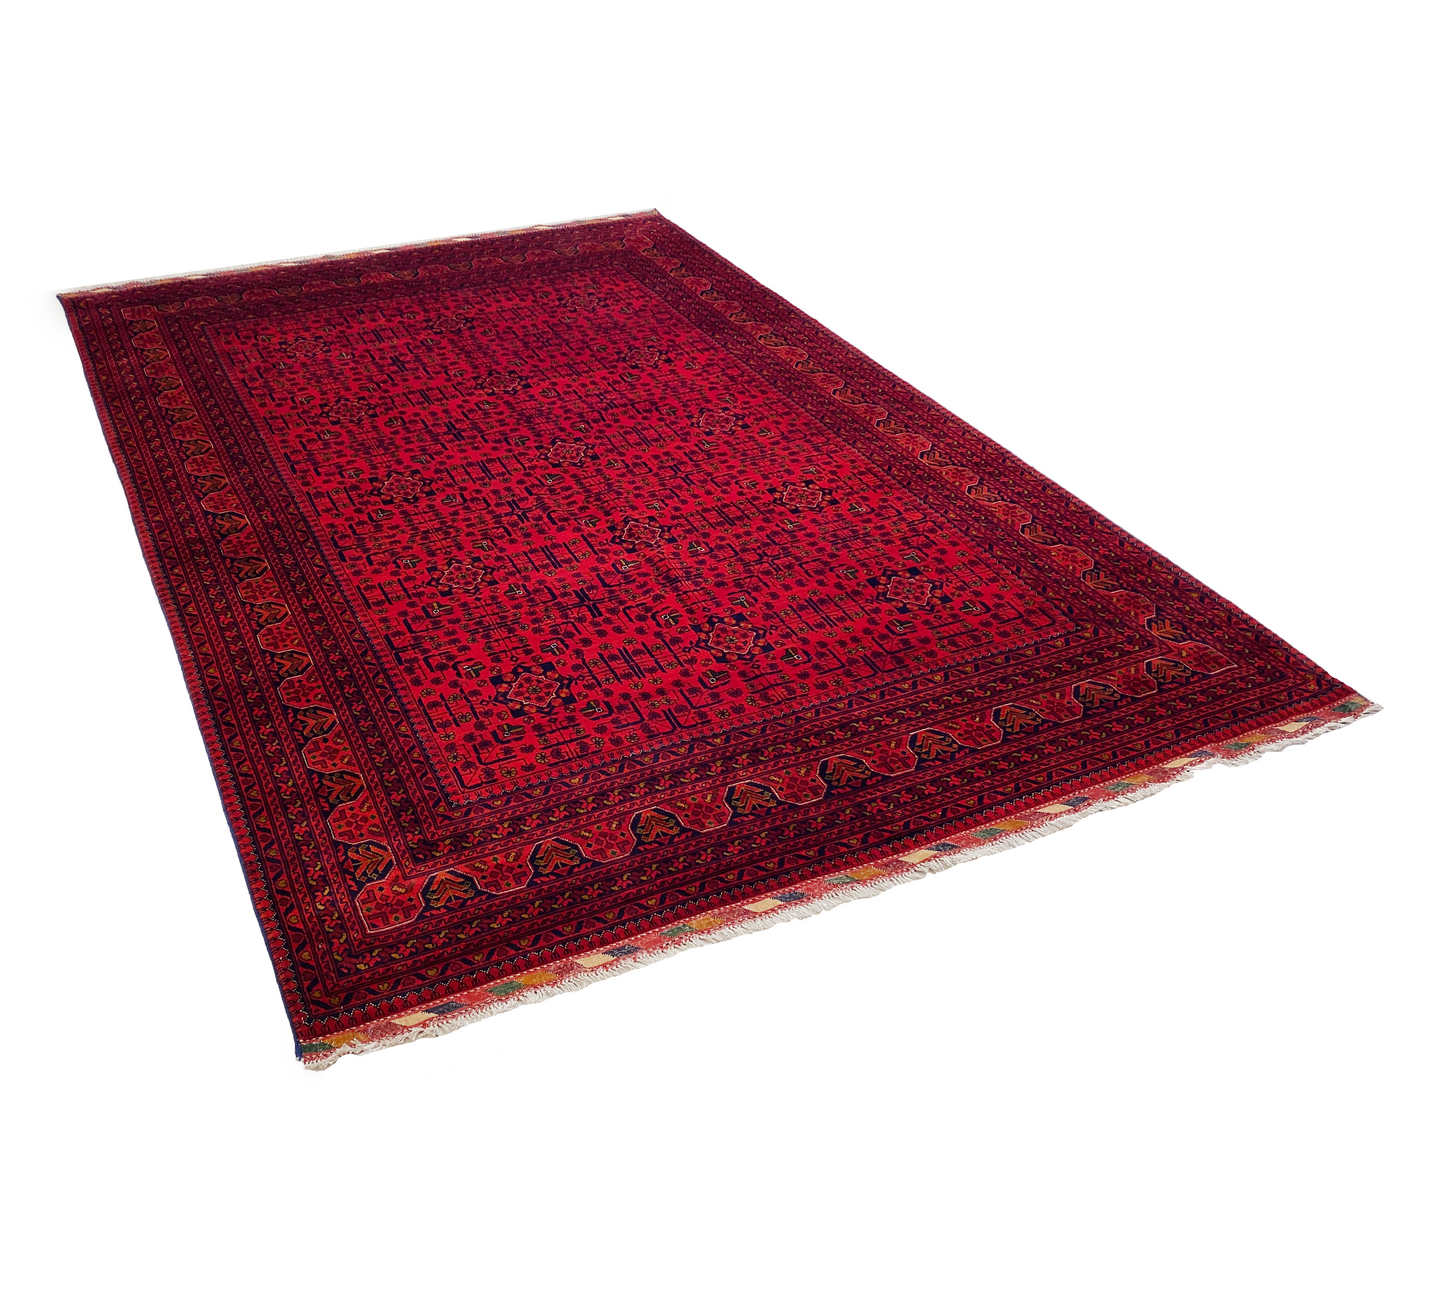 Kunduz Bicolor Carpet 308 x 208 cm